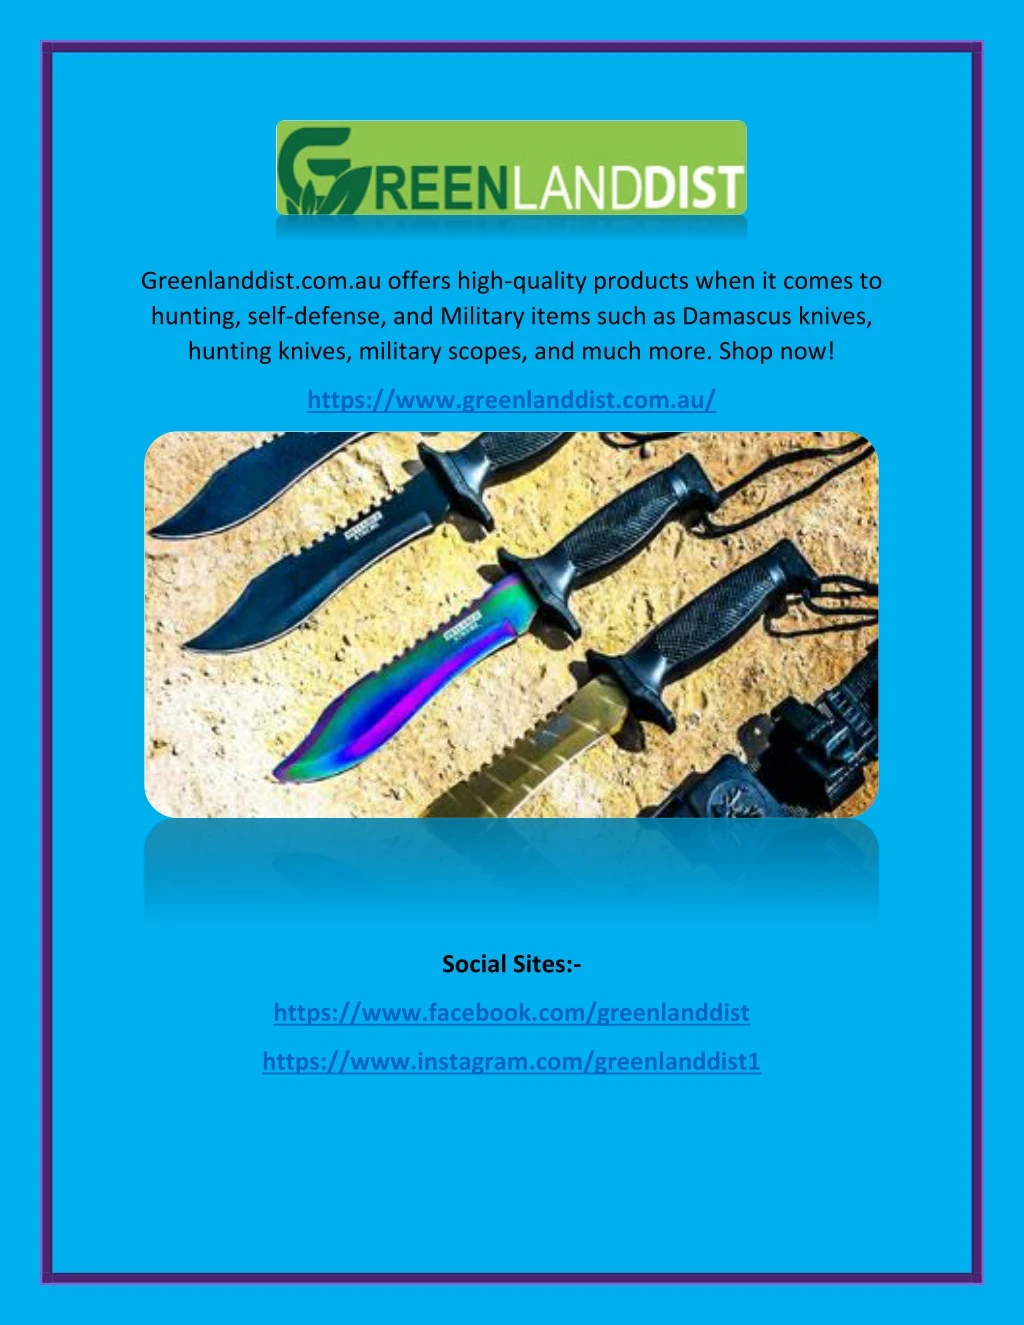 greenlanddist com au offers high quality products